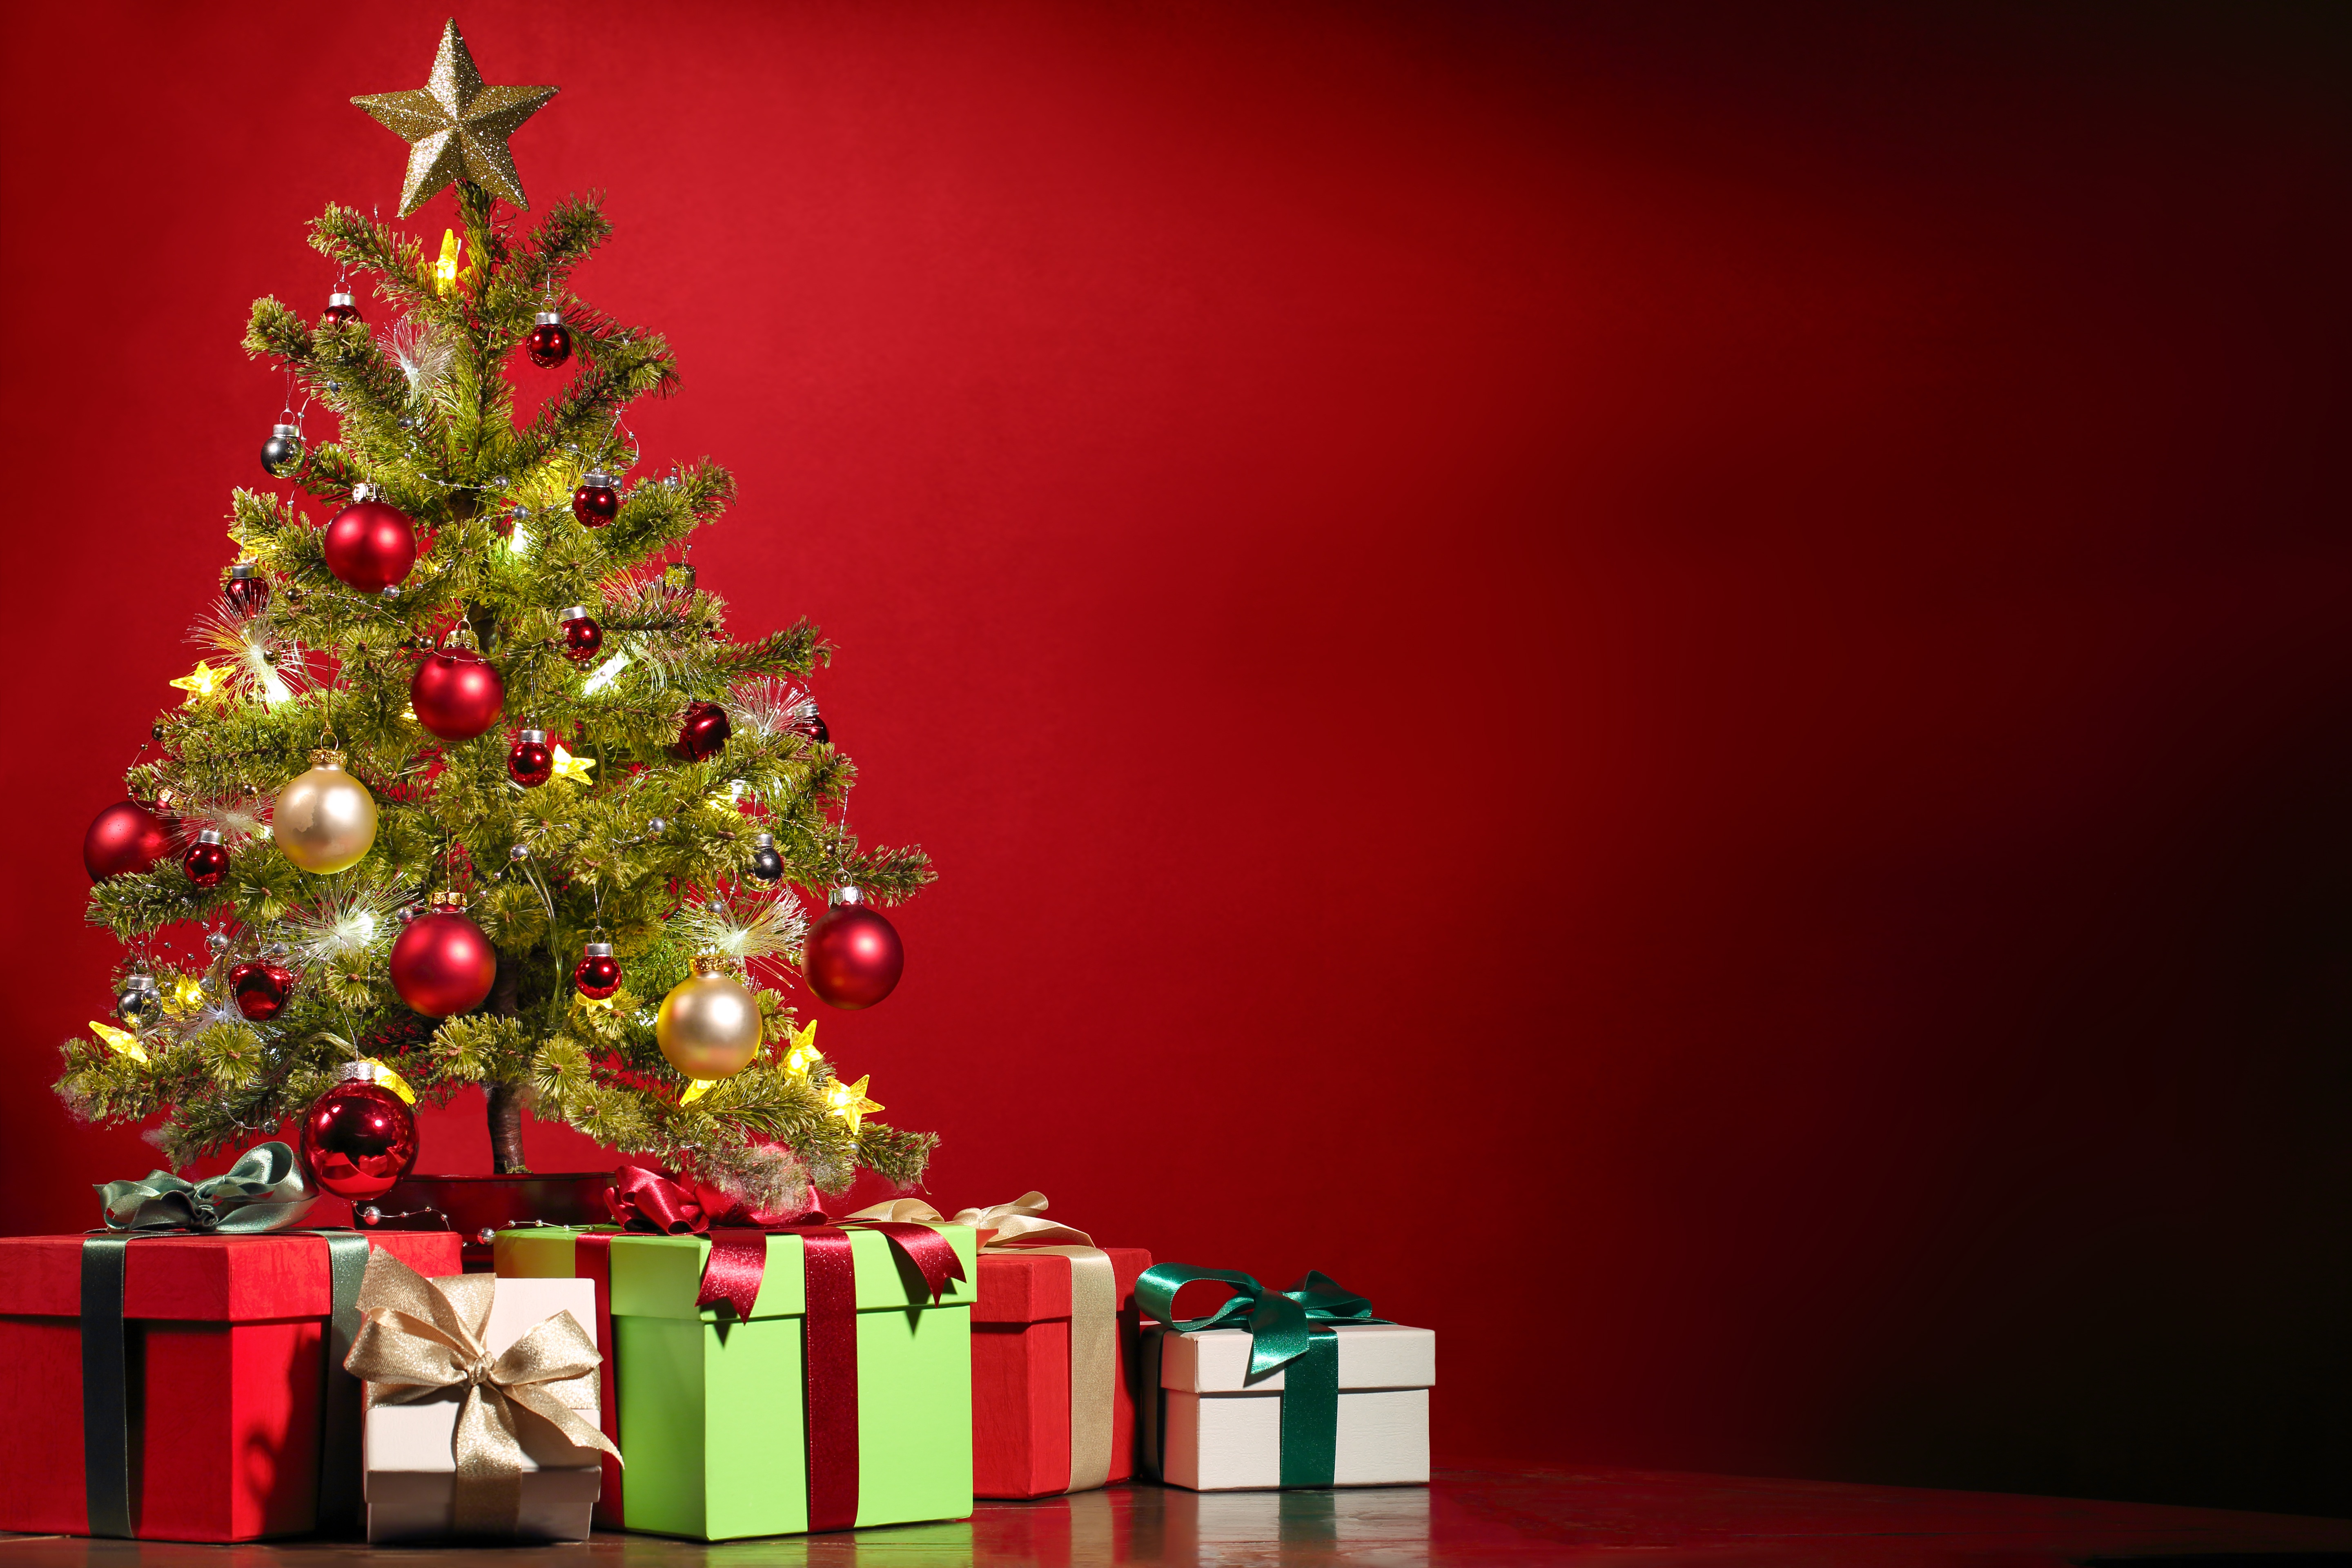 Christmas Presents Under the Tree 4k Ultra HD Wallpaper